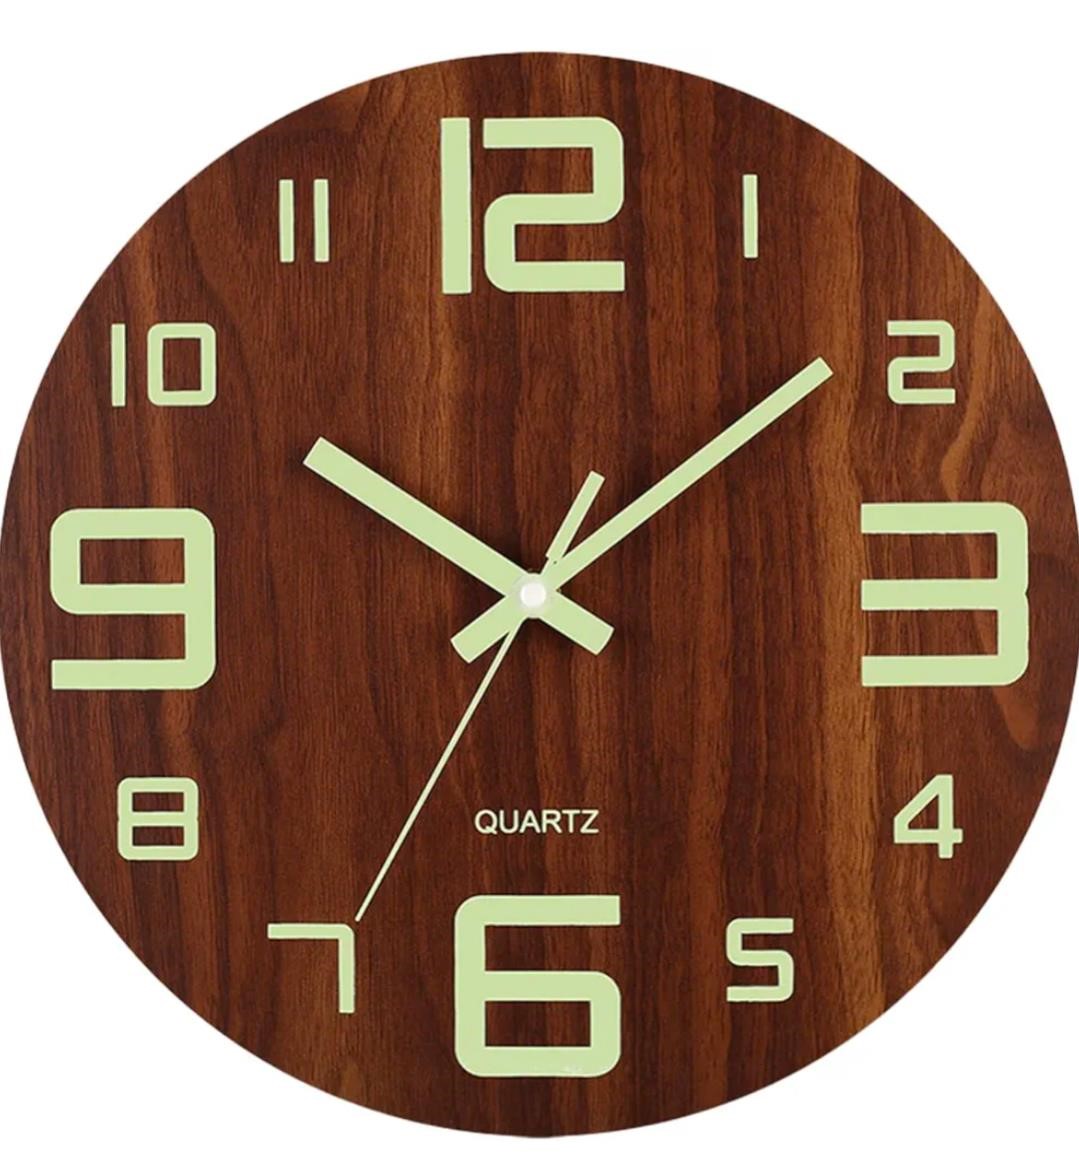 ($25) jormey Wall Clock Luminous Wooden